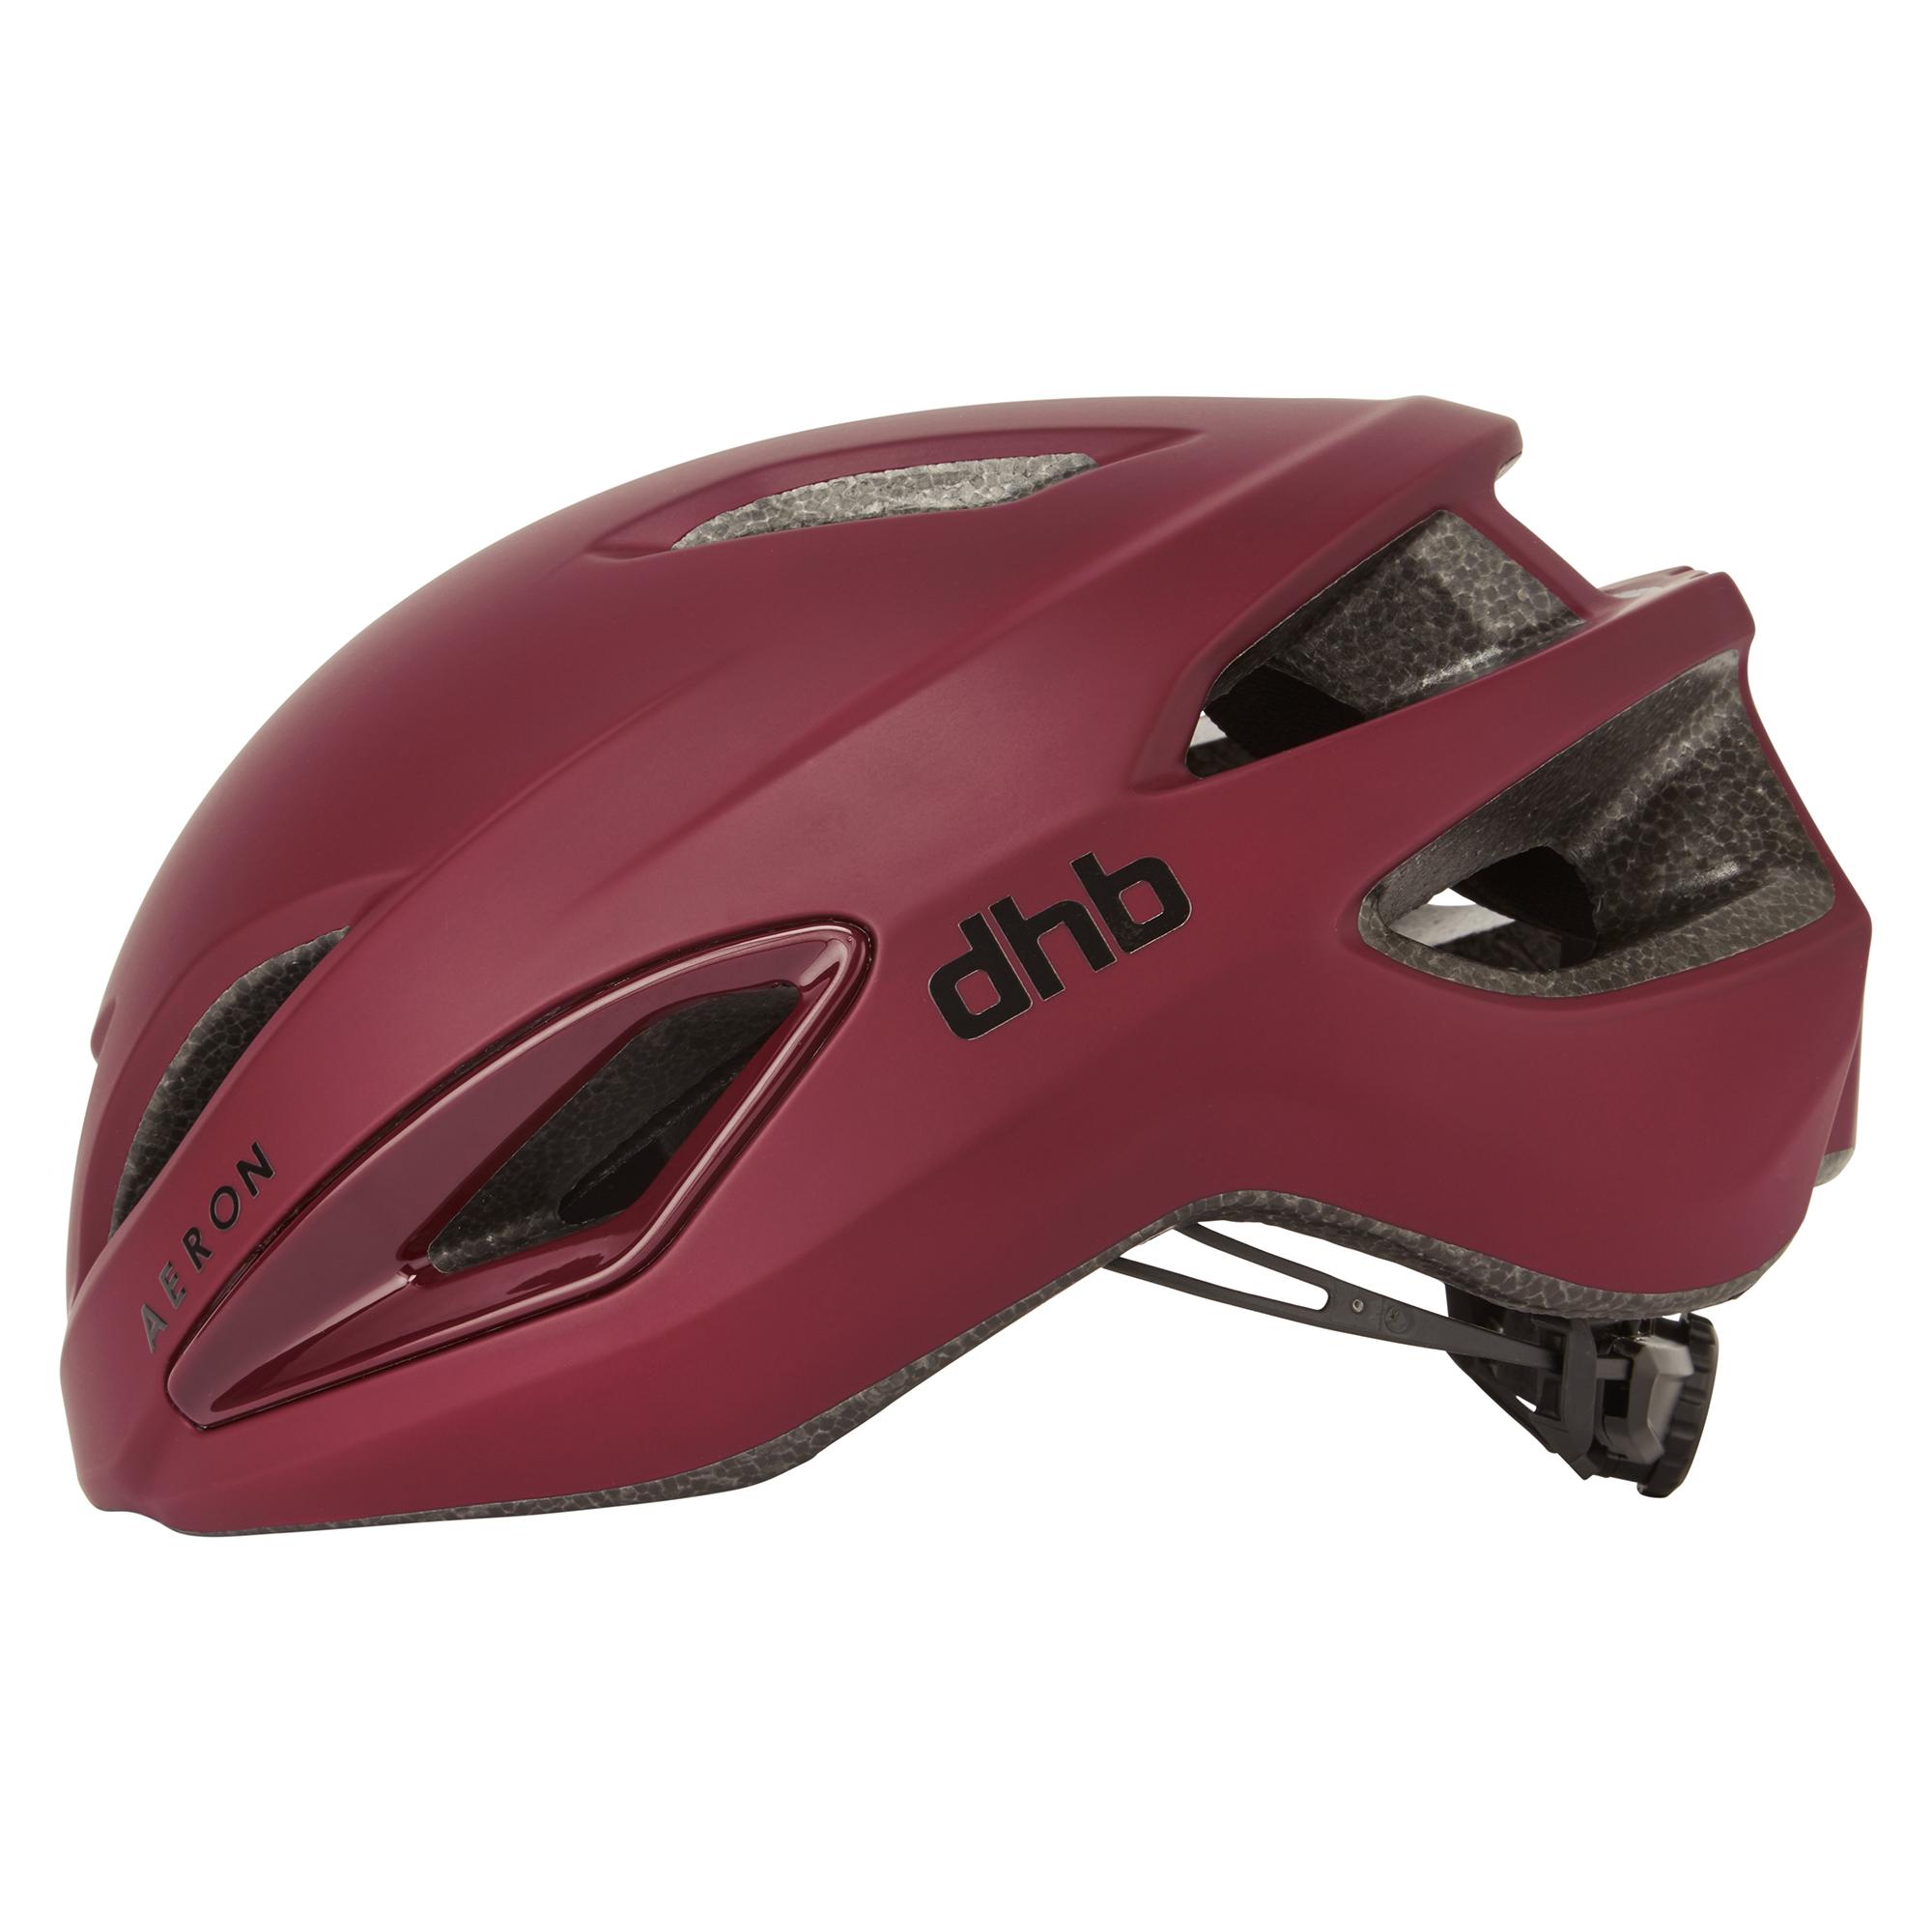 Dhb Aeron Helmet  Burgundy